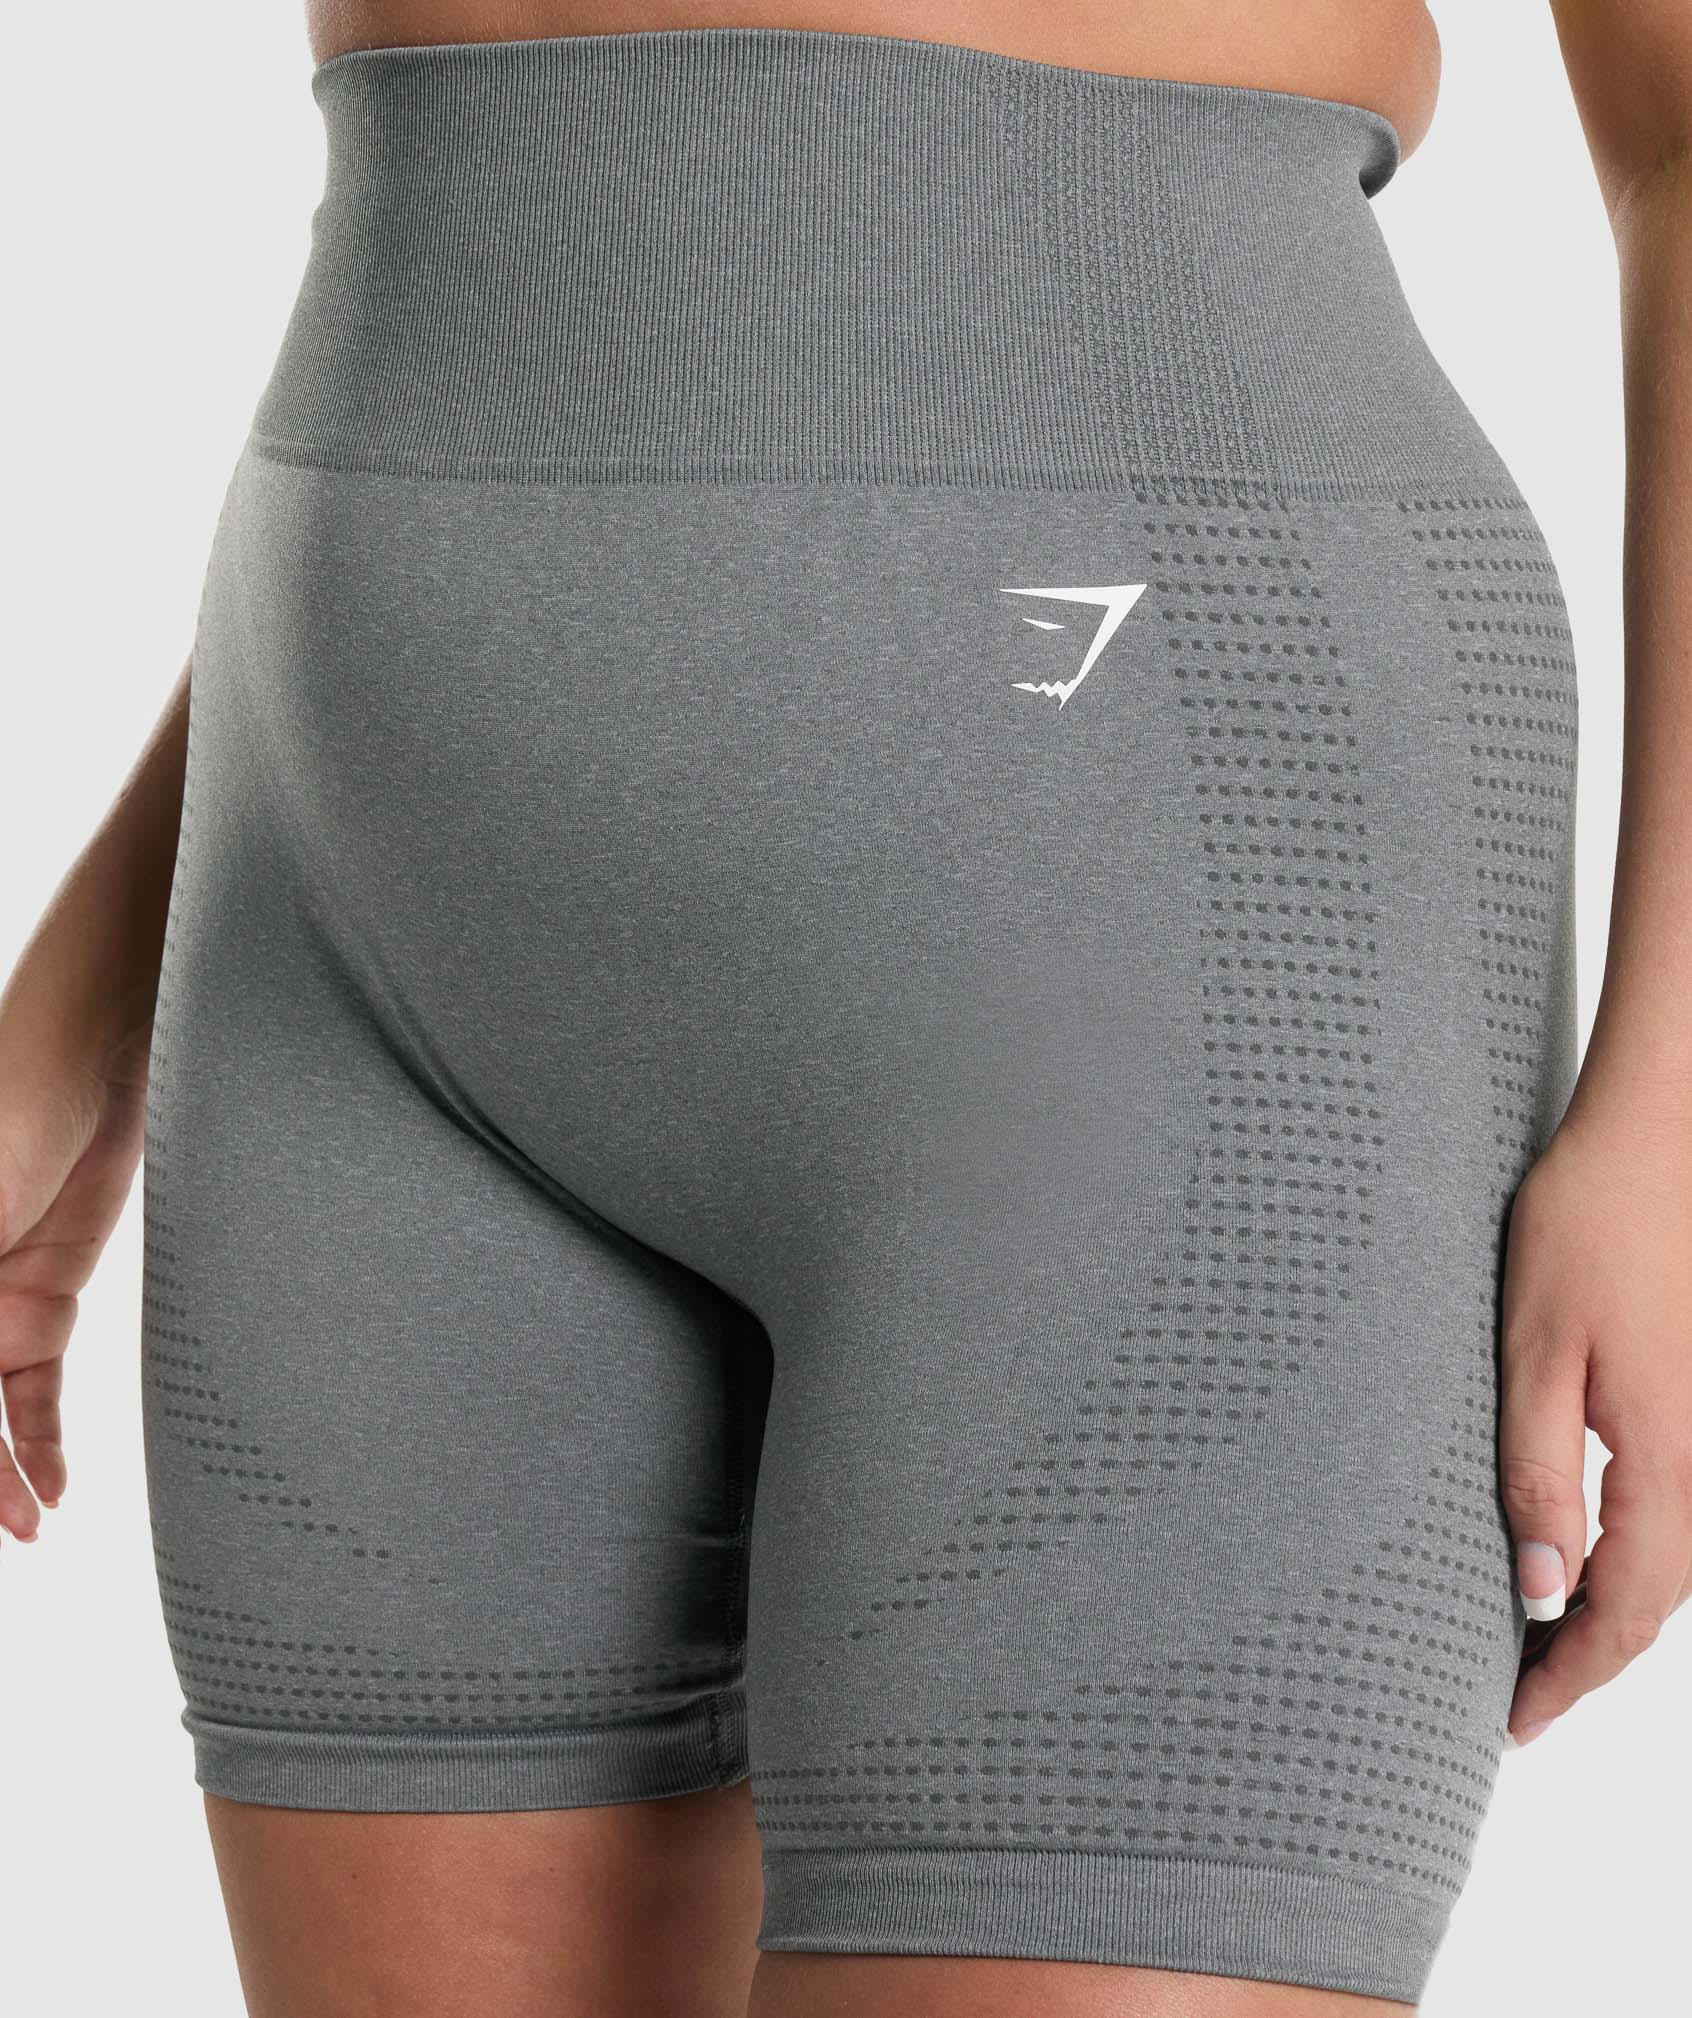 Gymshark Vital Seamless 2.0 Leggings - Smokey Grey Marl  Seamless leggings,  Athletic pants for women, Womens running pants